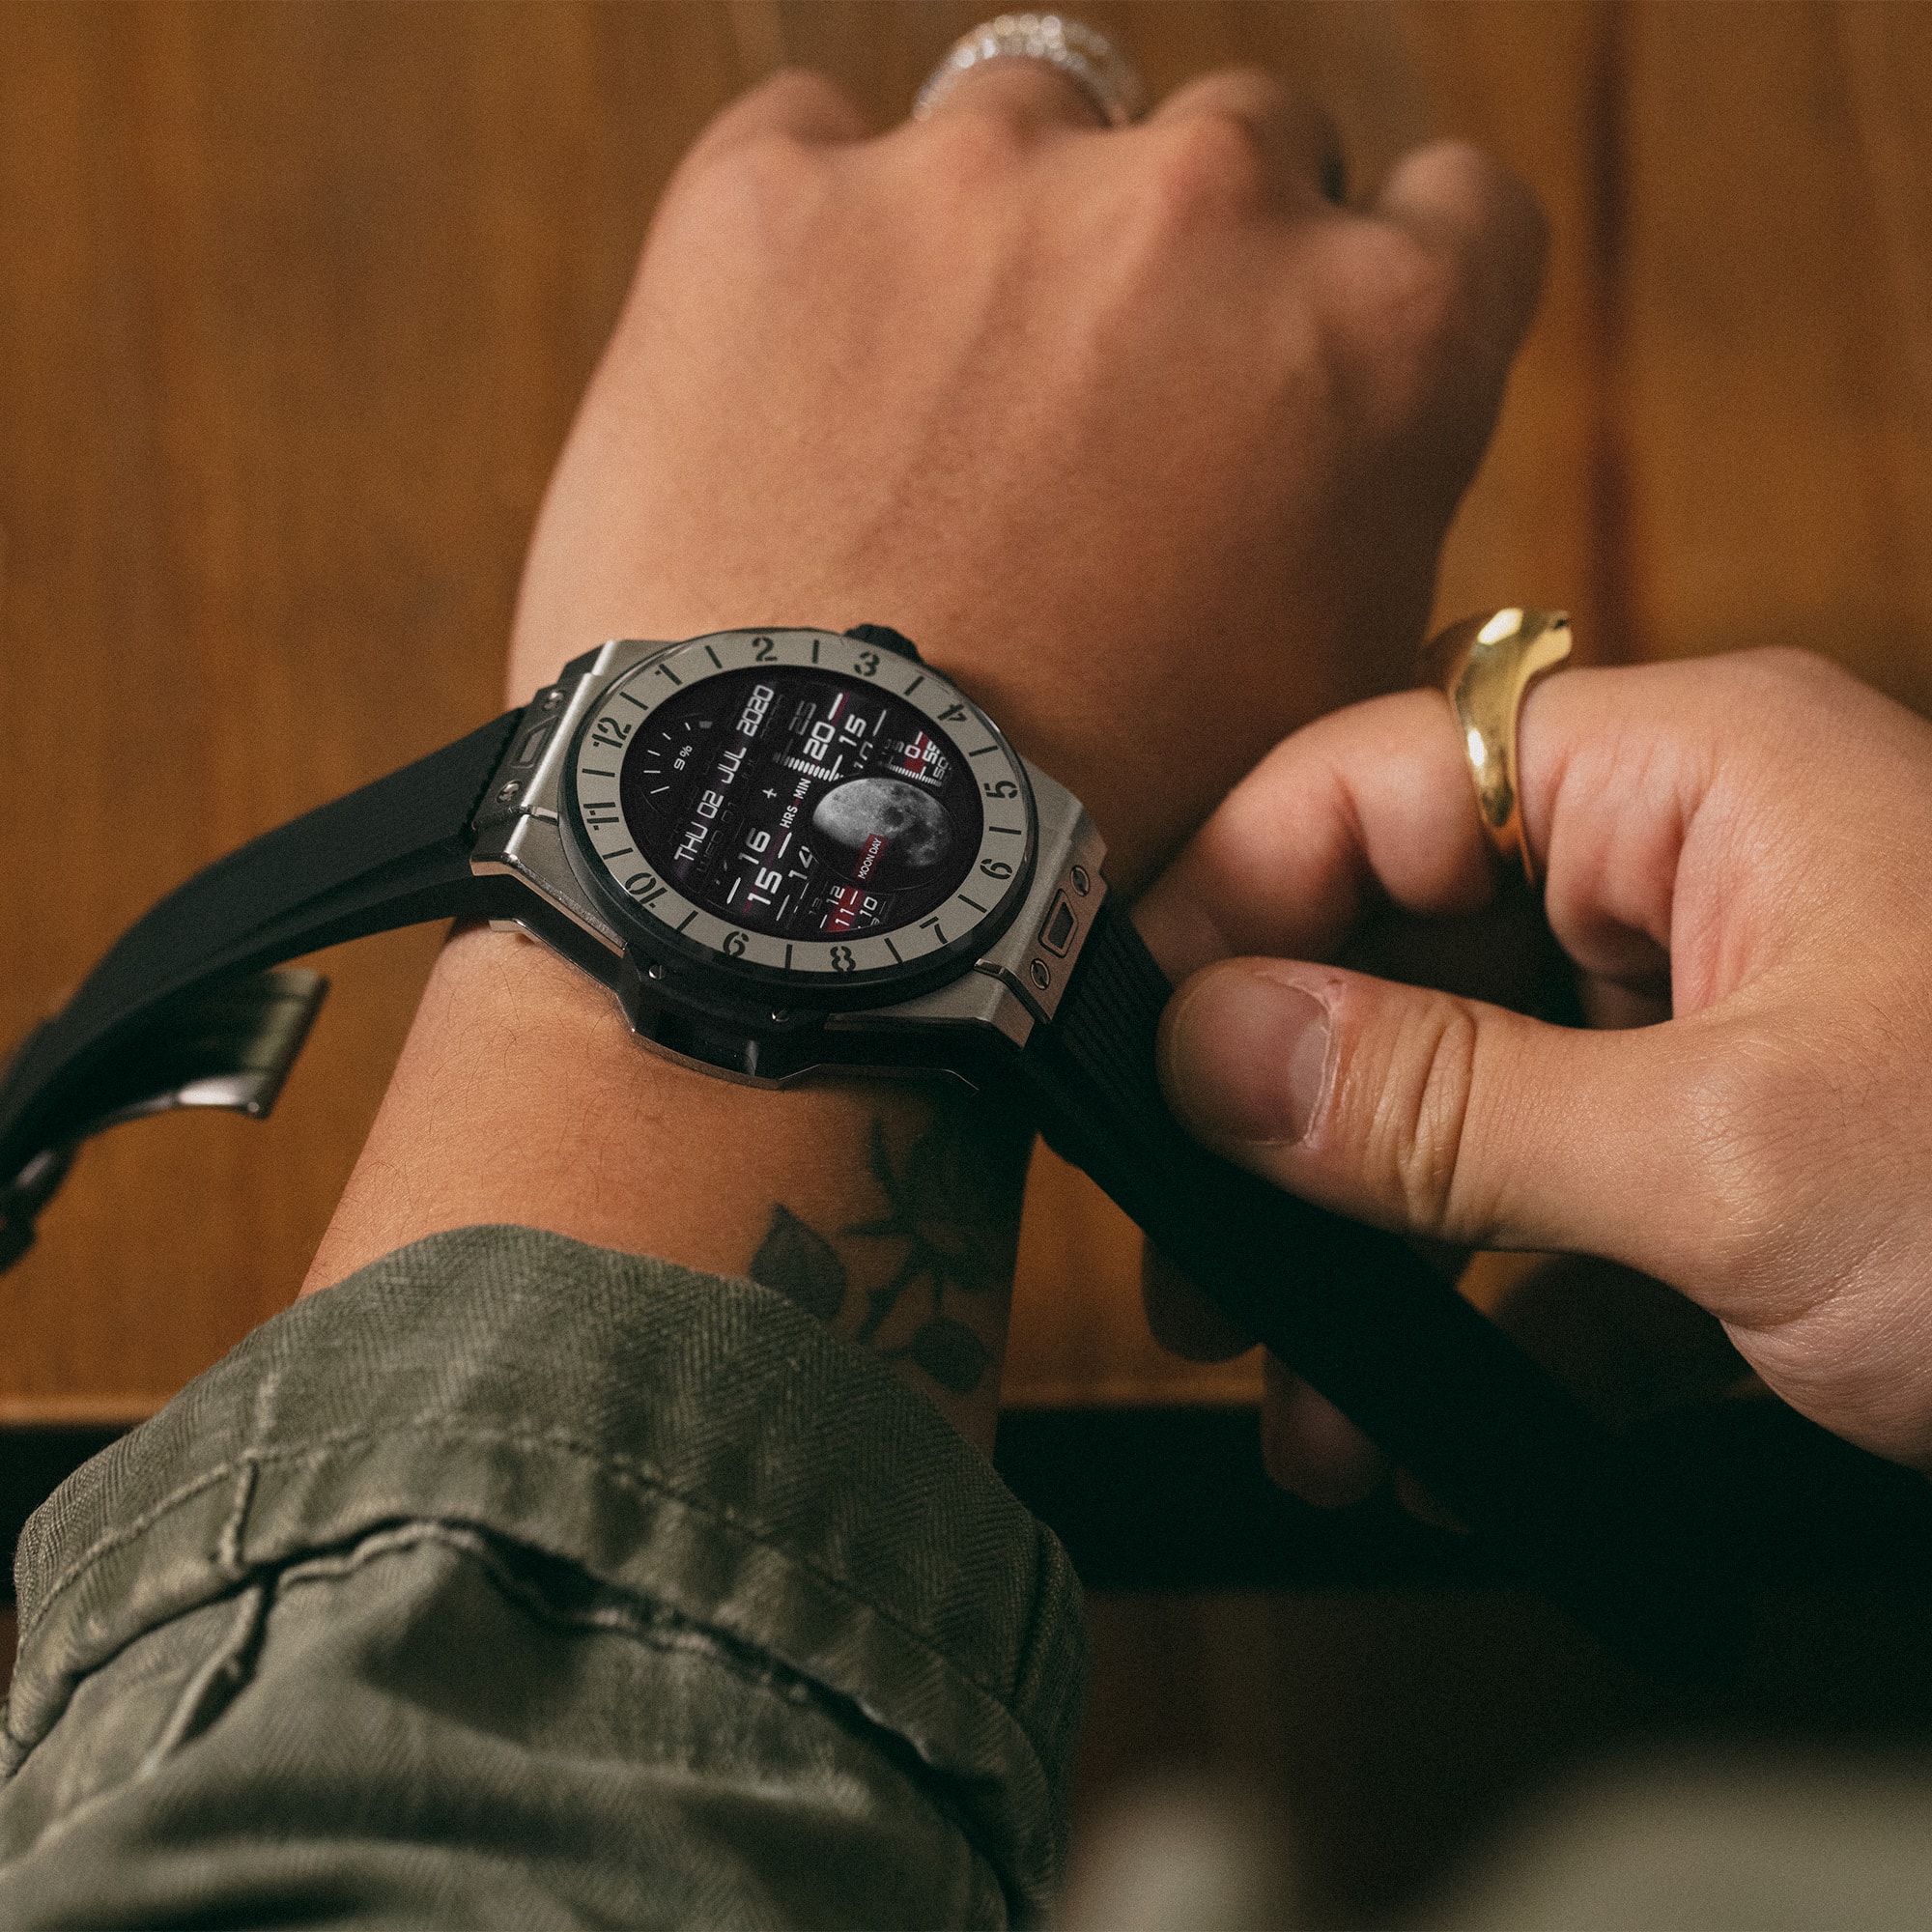 從 Hublot 智能腕錶 Big Bang e 看腕錶設計的更多可能性 | BUYER'S GUIDE